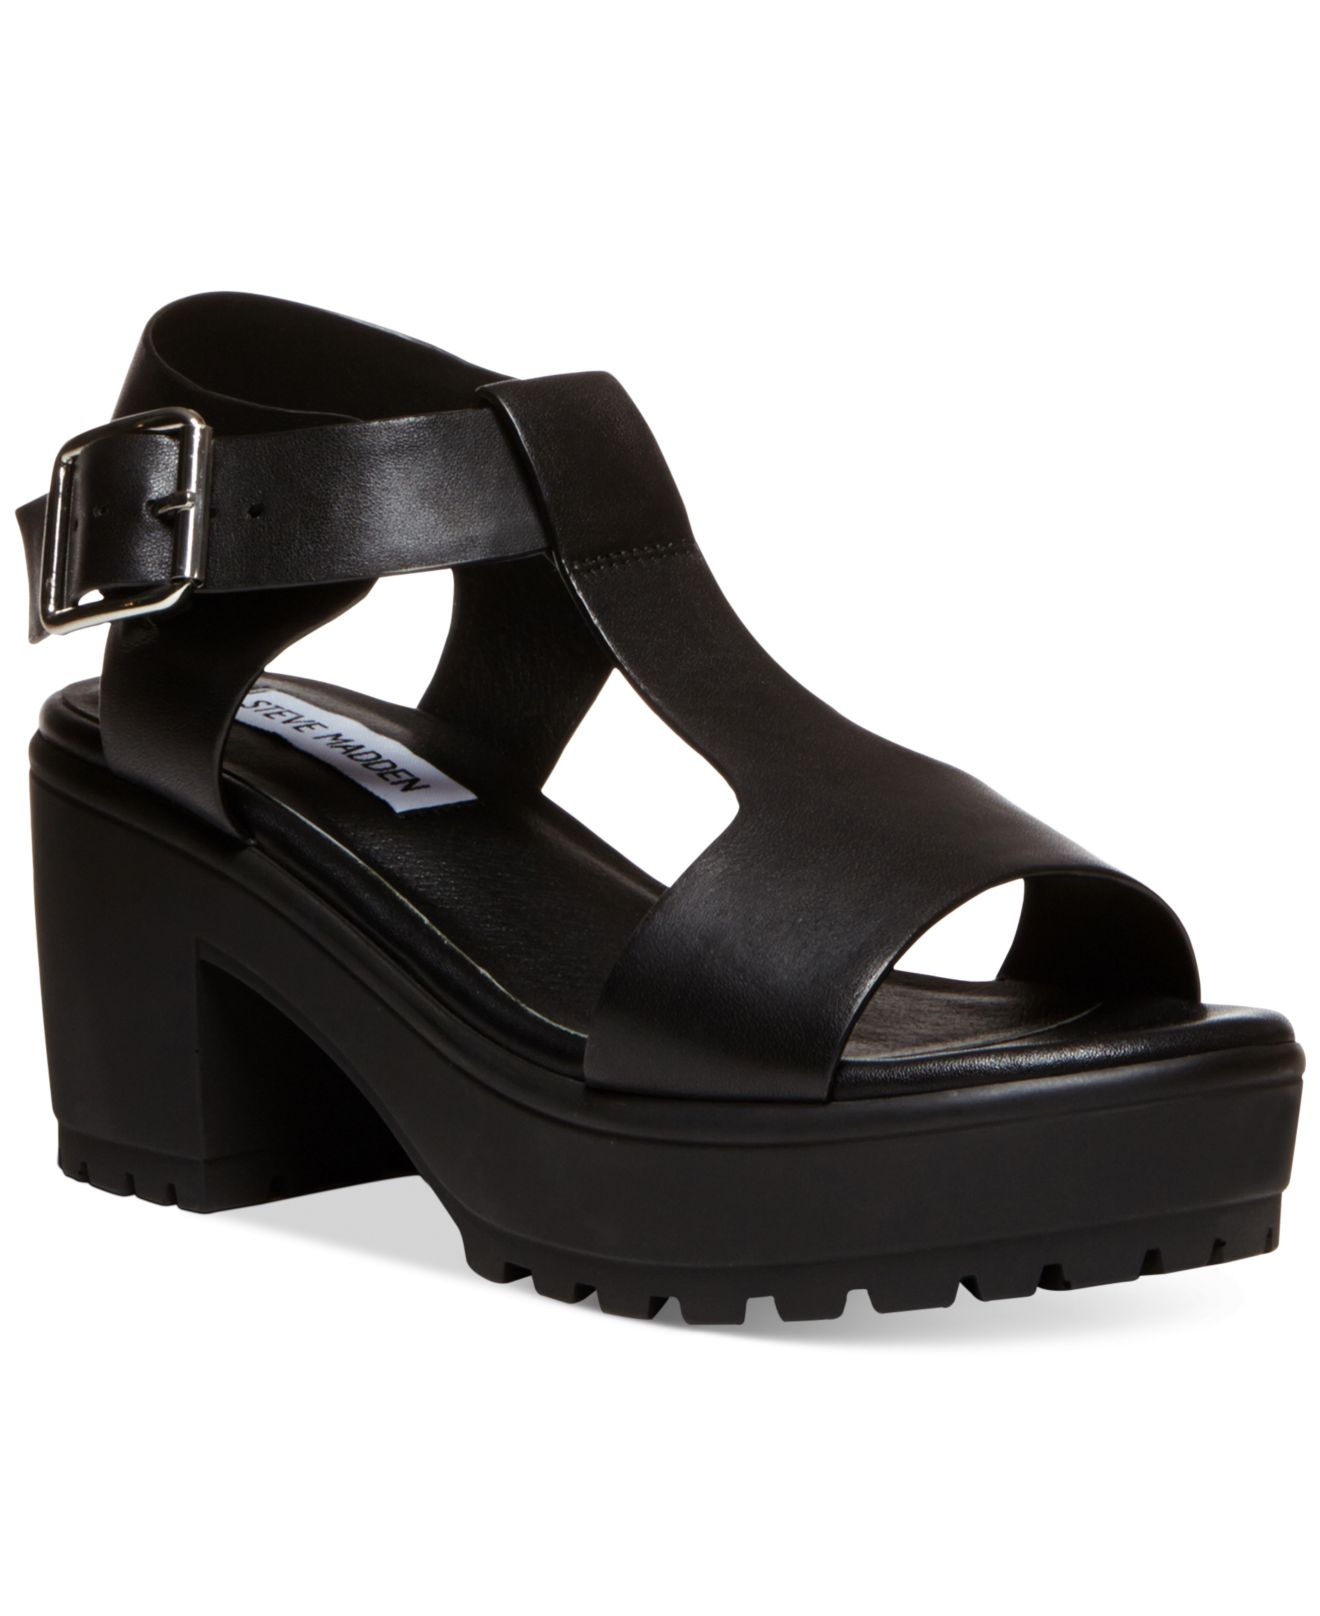 Lyst - Steve madden Women'S Stefano Block Heel Platform Sandals in Black